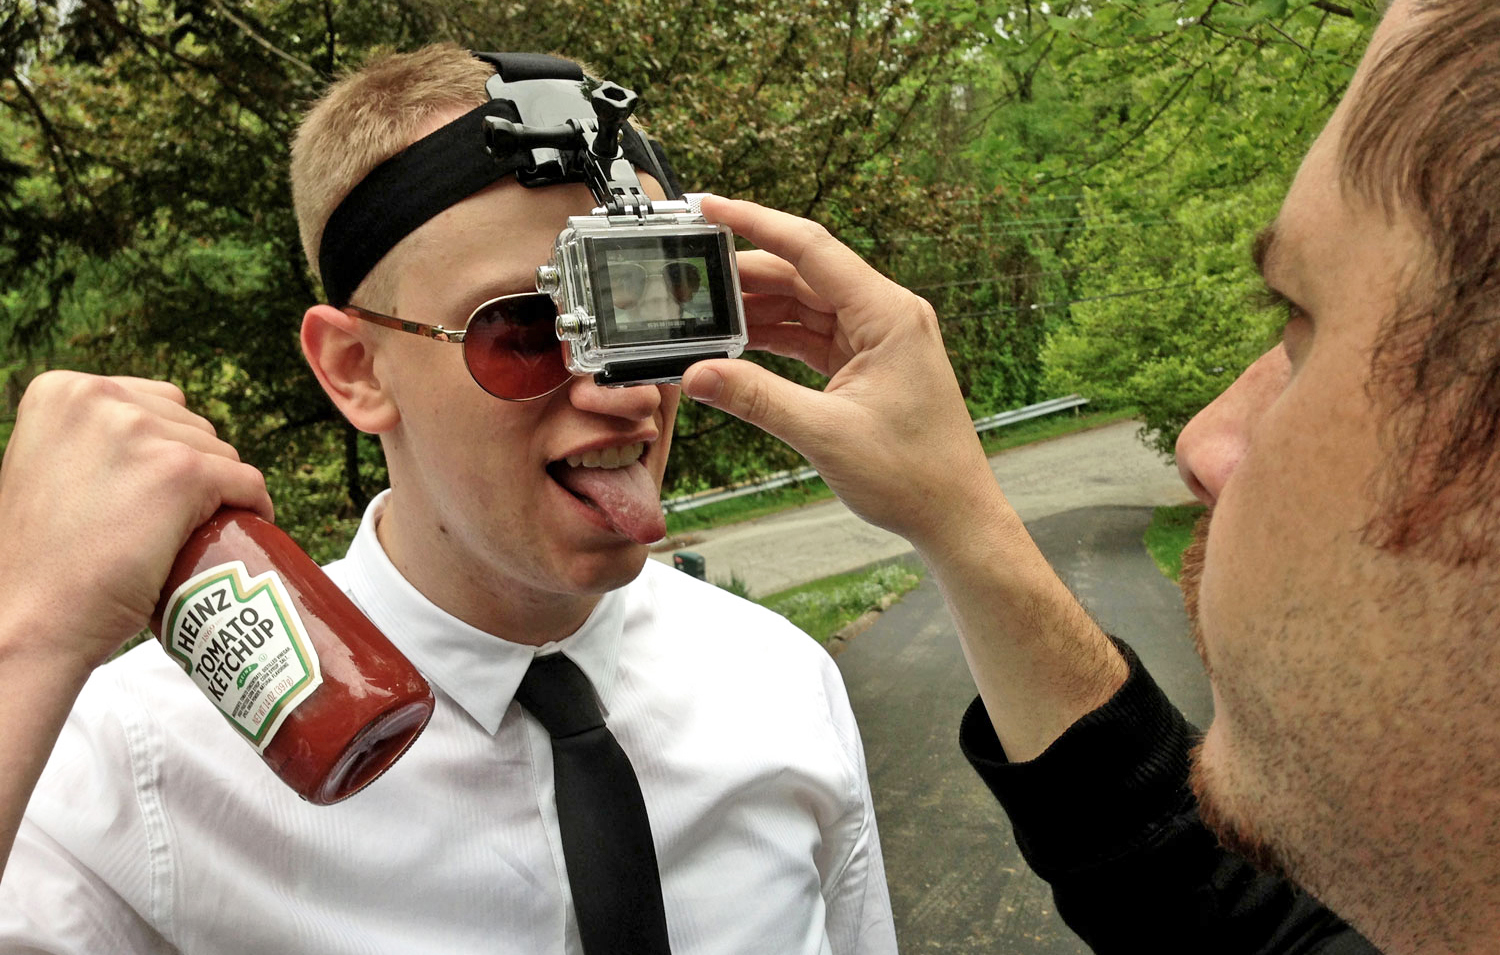 John Rokosz and Marcus Morelli, using the GoPro camera